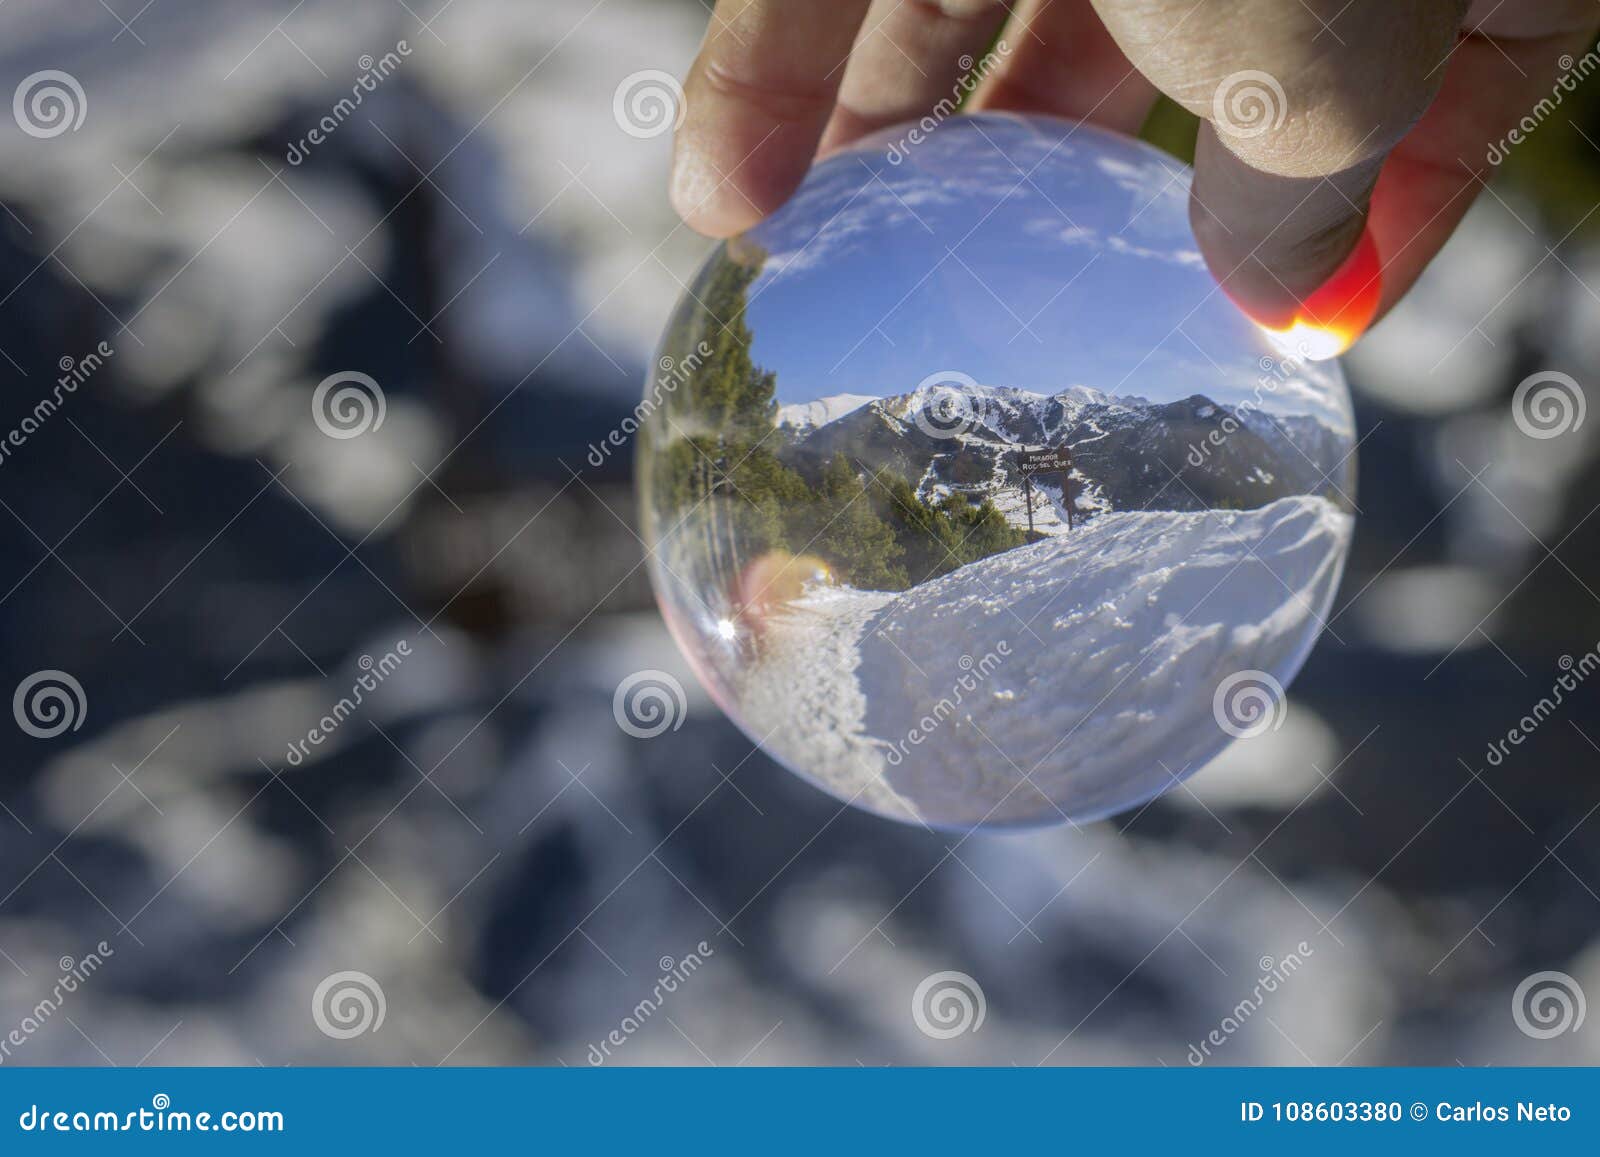 roc del quer trekking trail, reflection view through crystal ball. andorra.